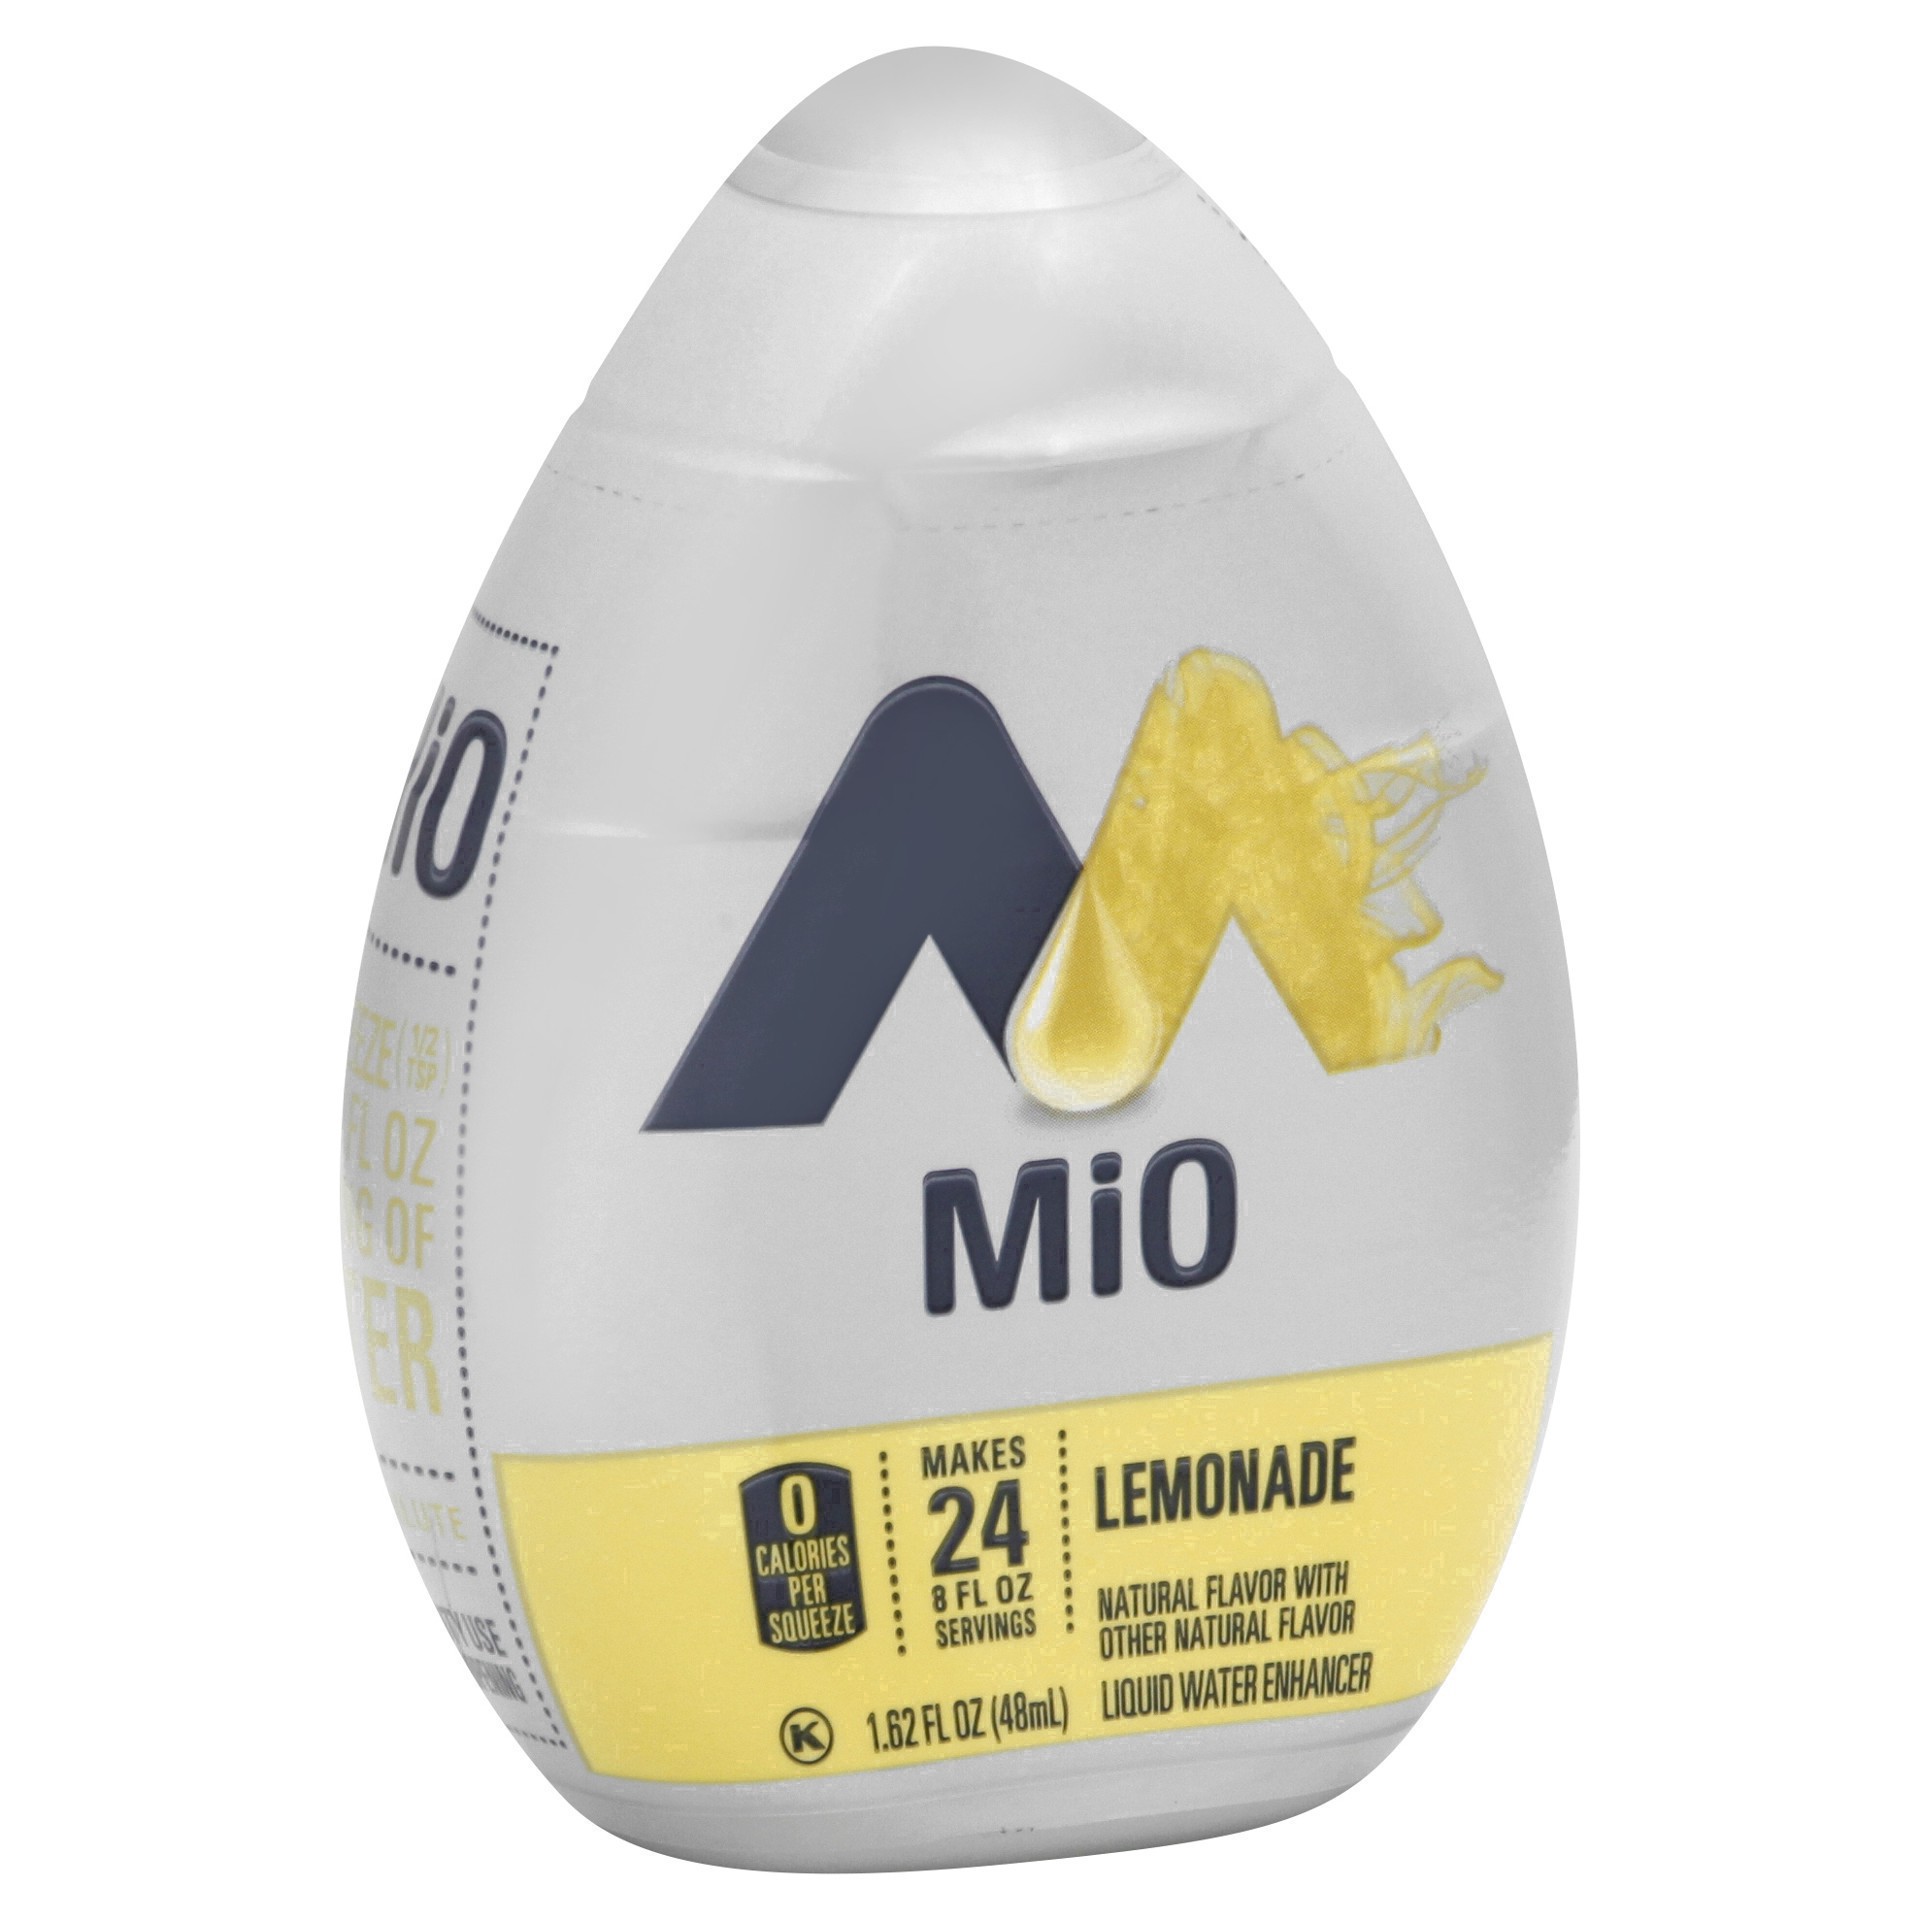 slide 19 of 77, MiO Lemonade Naturally Flavored Liquid Water Enhancer - 1.62 fl oz, 1.62 fl oz